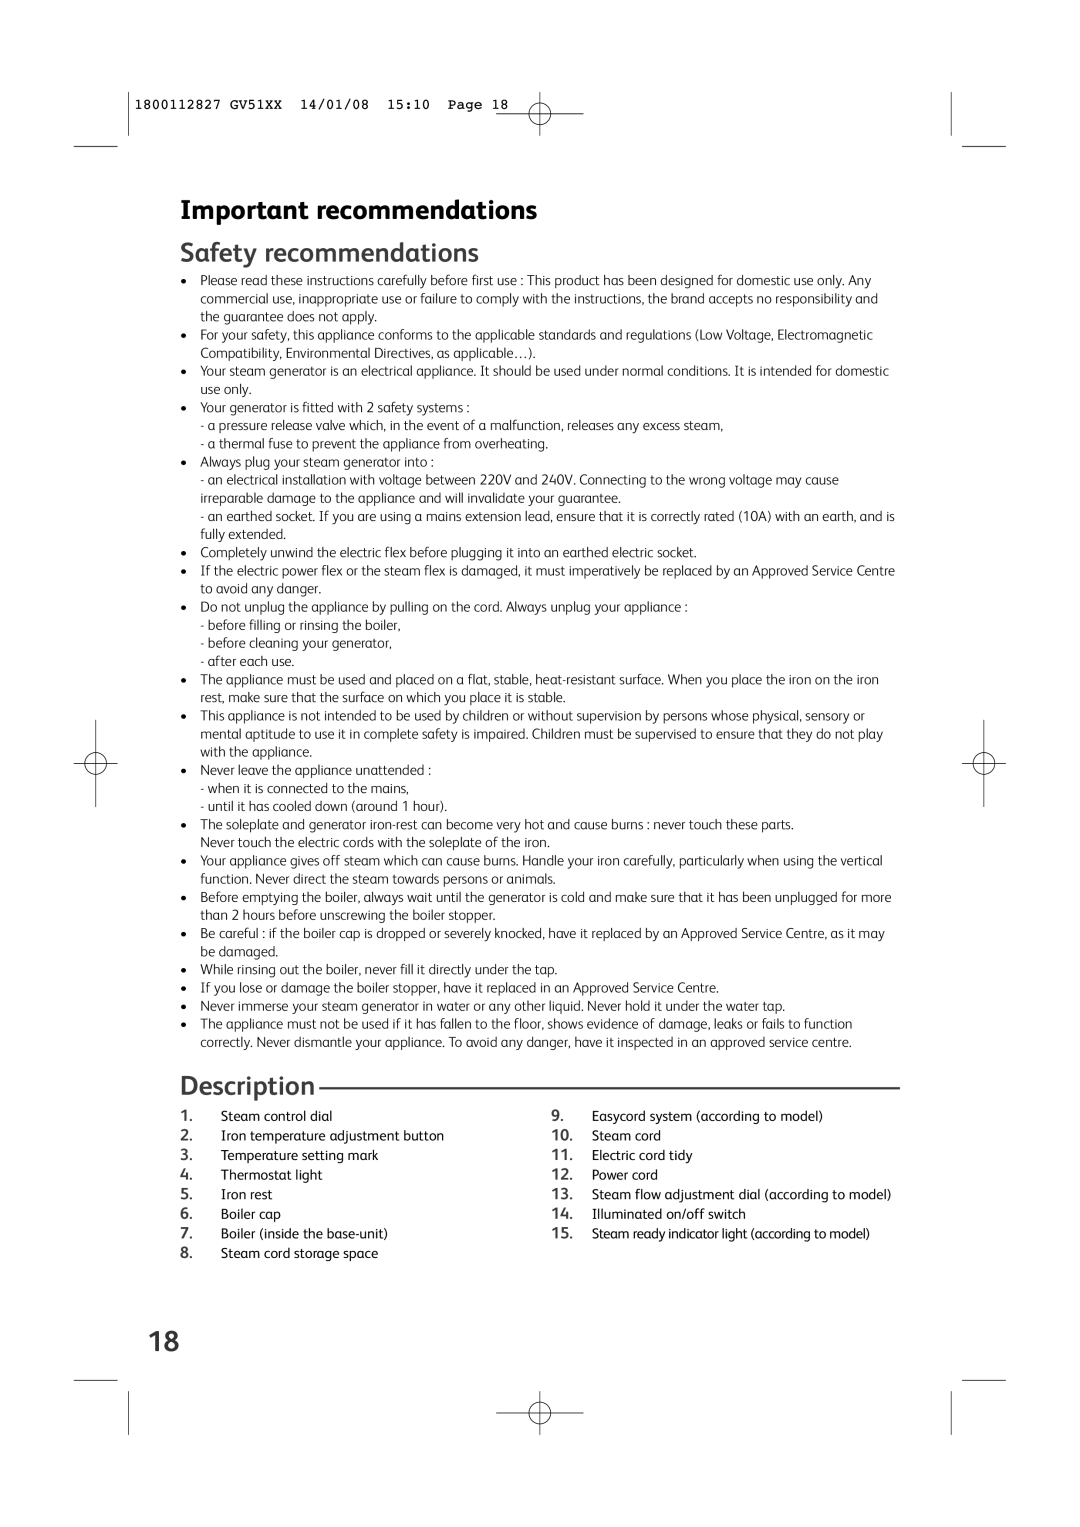 Tefal GV5120C0, GV5120C5, GV5120S0, GV5120X0, GV5120E0 manual Important recommendations, Safety recommendations, Description 